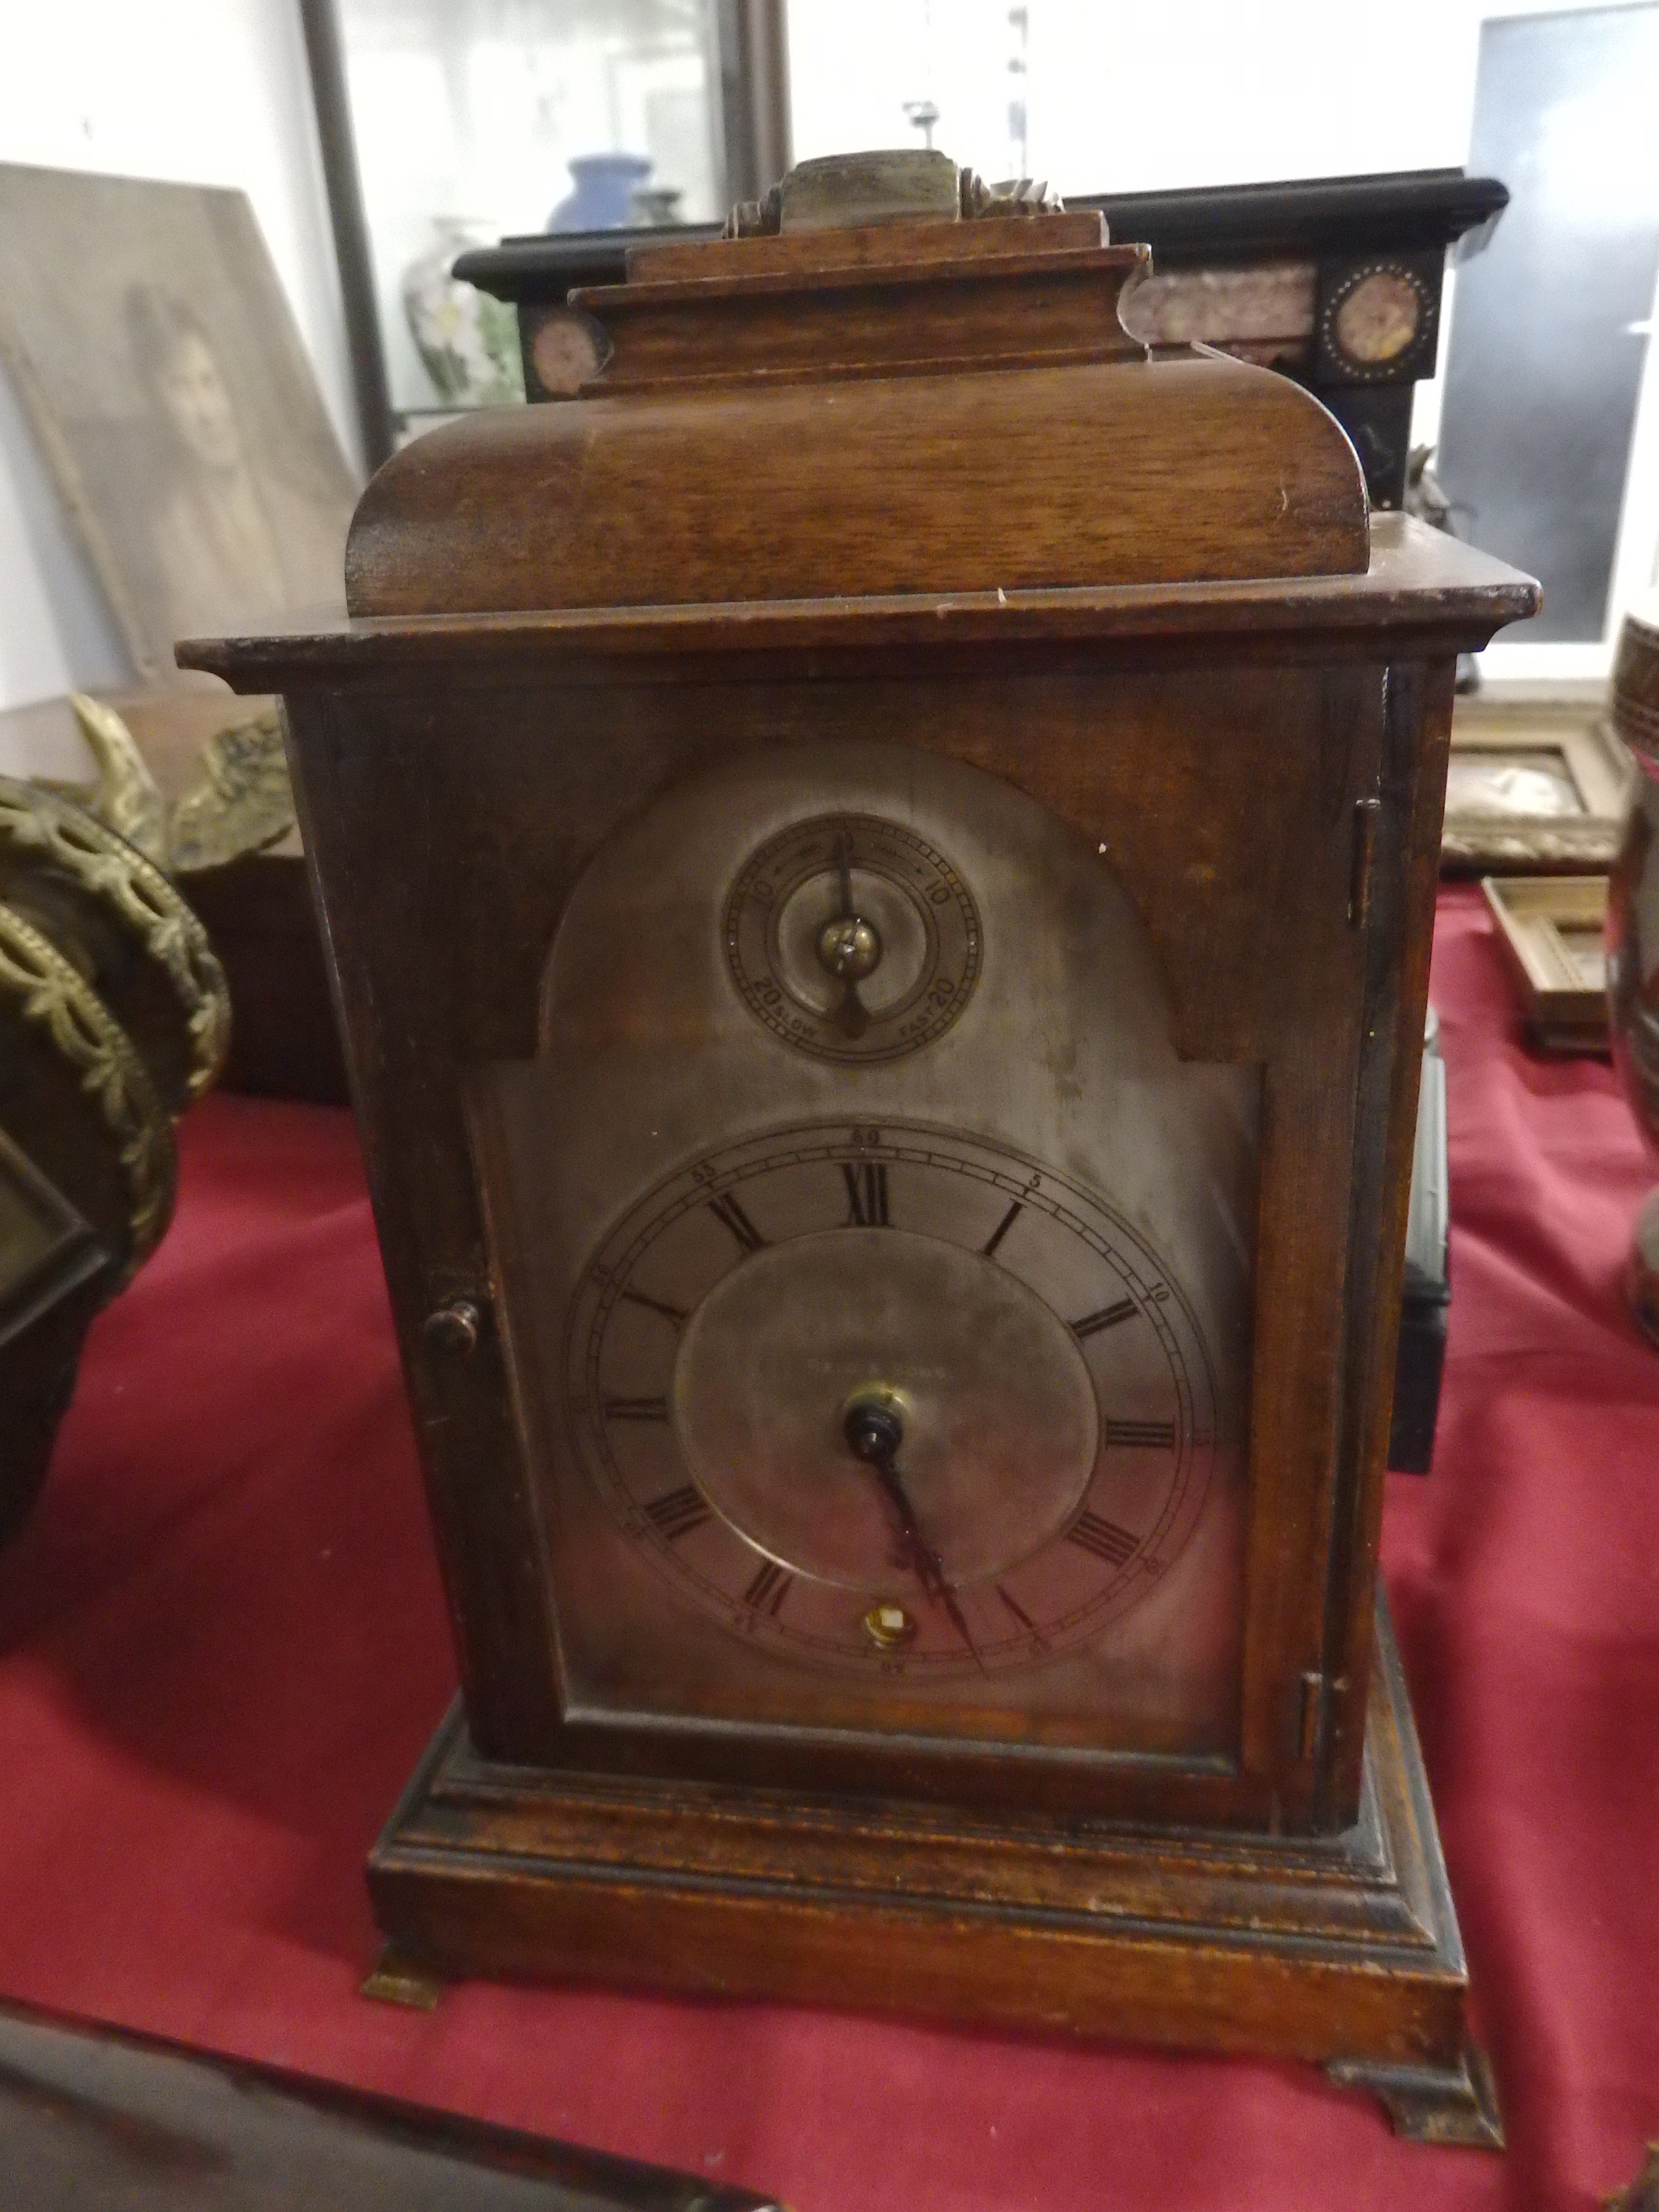 LNER Mahogany mantle clock "Reid Newcastle"